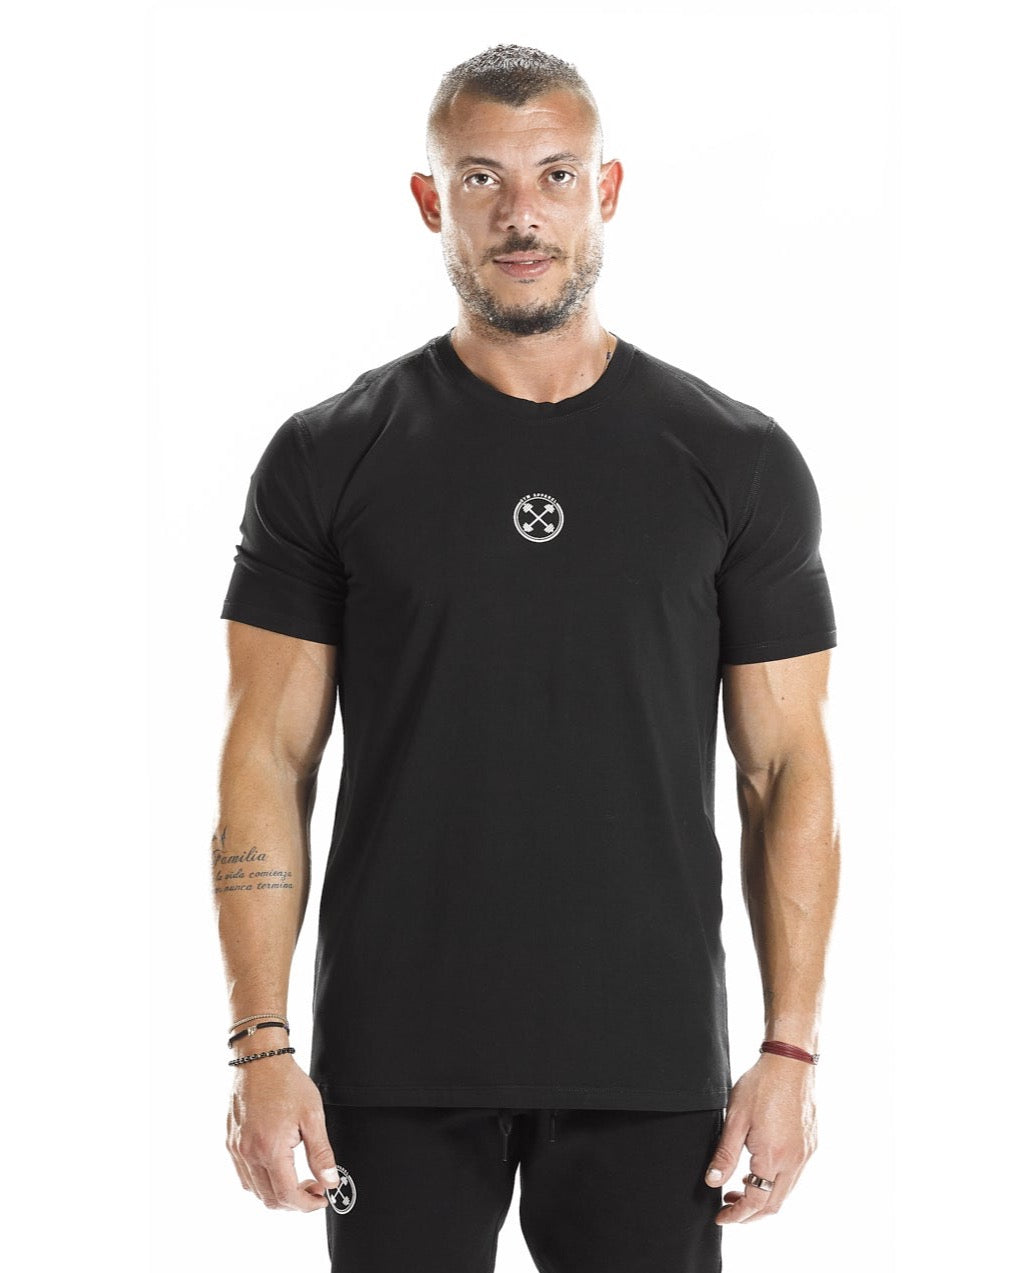 Bar-Basic T-shirt 2.0 [Cotton] - T-Shirt - Gym Apparel Egypt